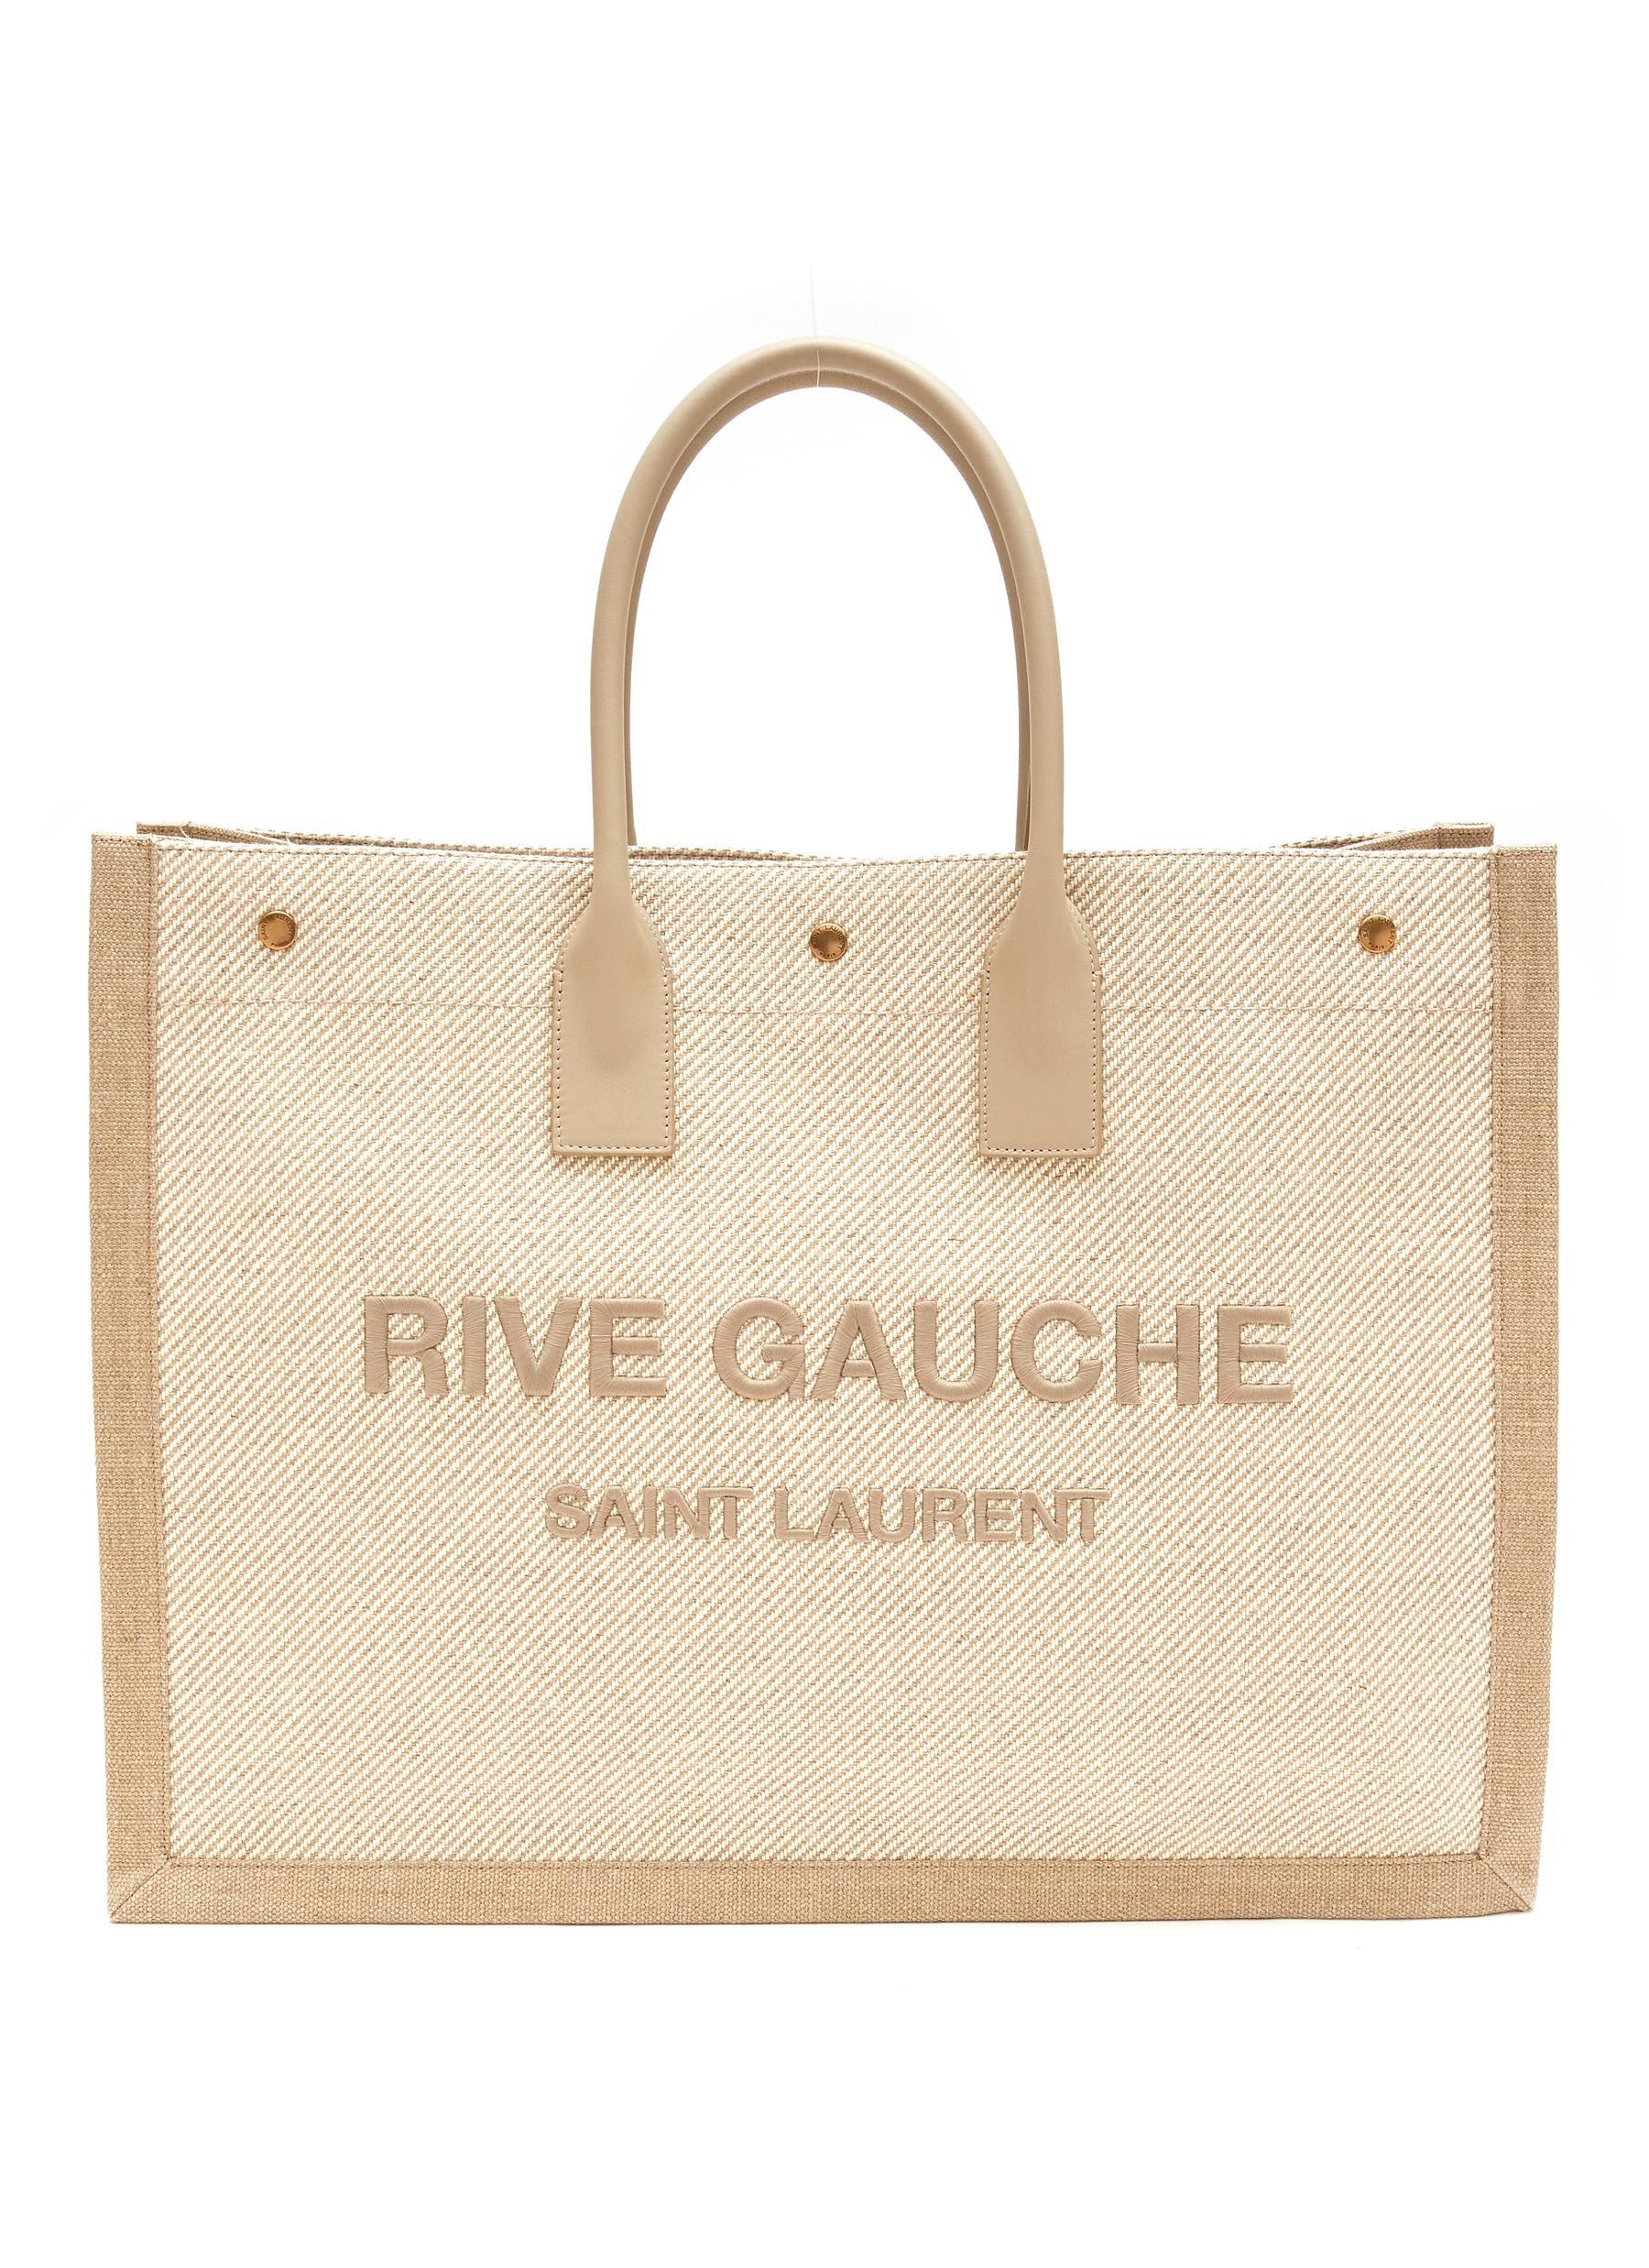 'RIVE GAUCHE' TOTE BAG